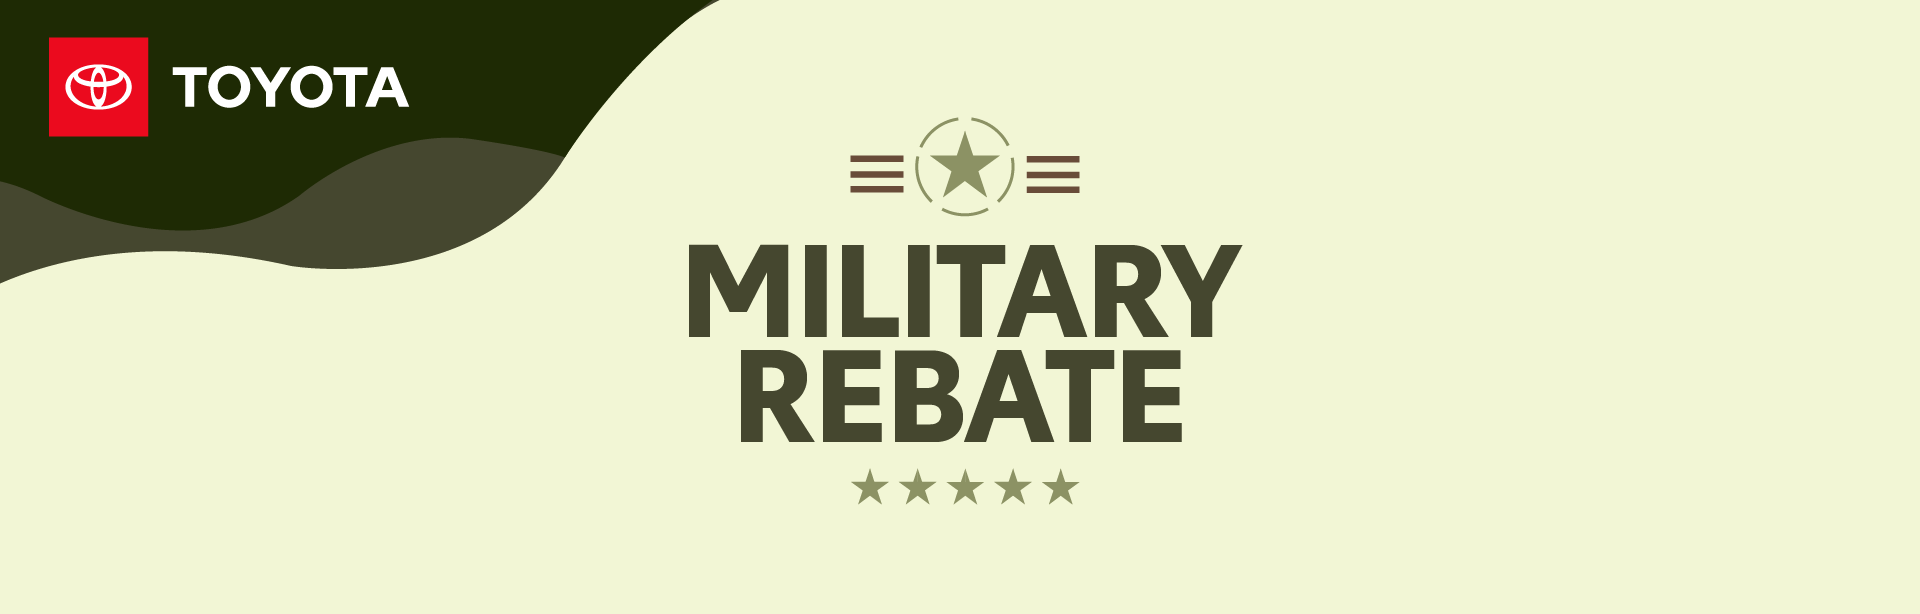 newark-toyota-world-military-rebate-program